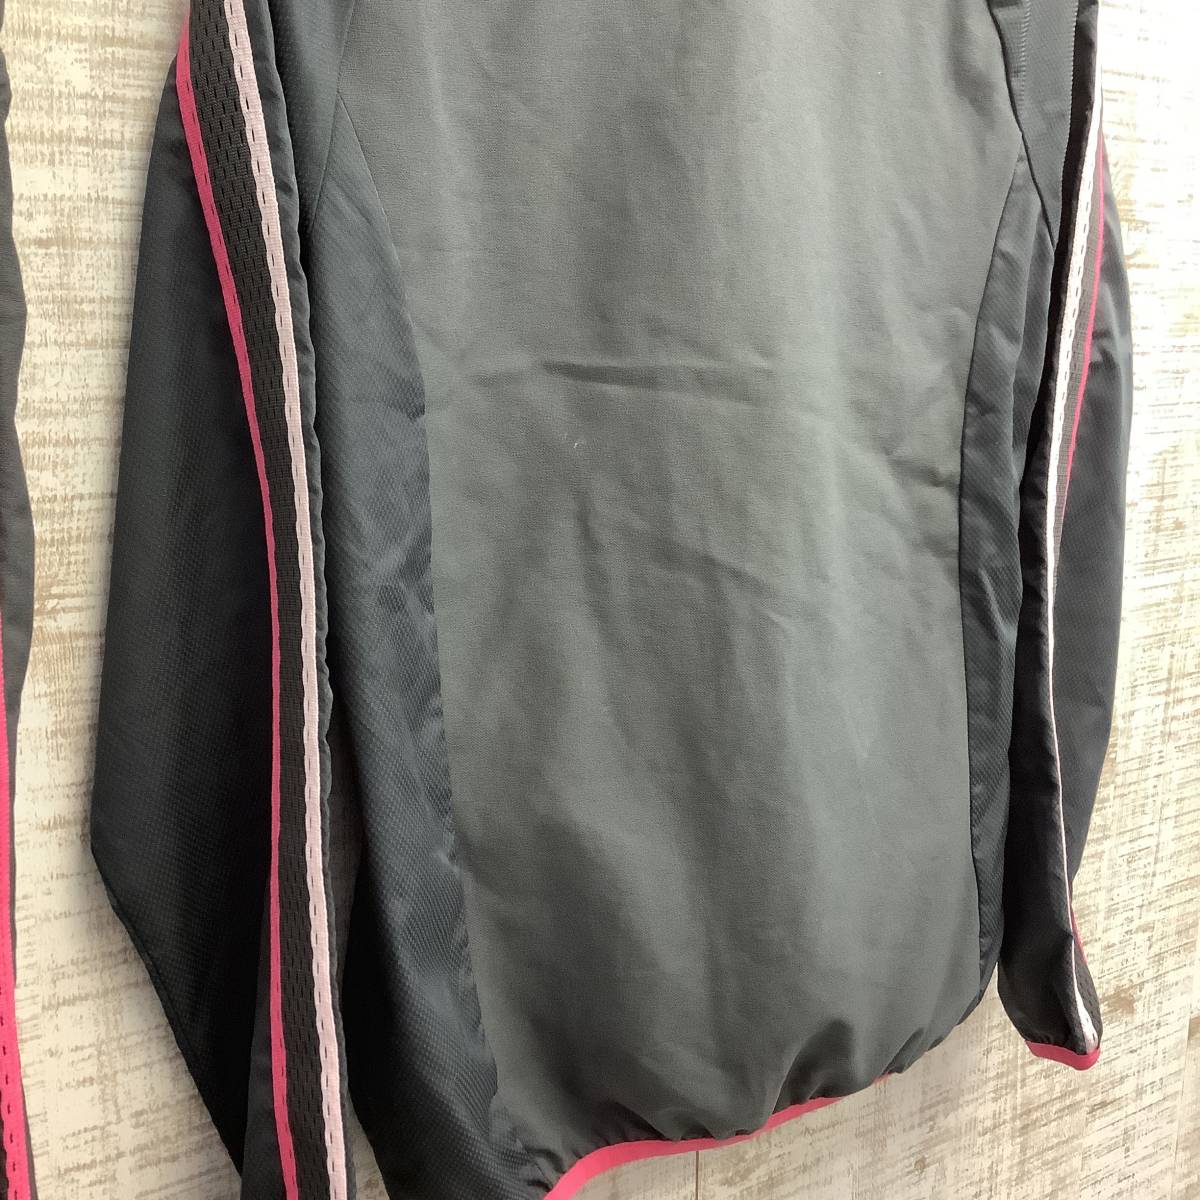 A389*NIKEl Nike jersey top and bottom set beautiful goods size S dark gray 